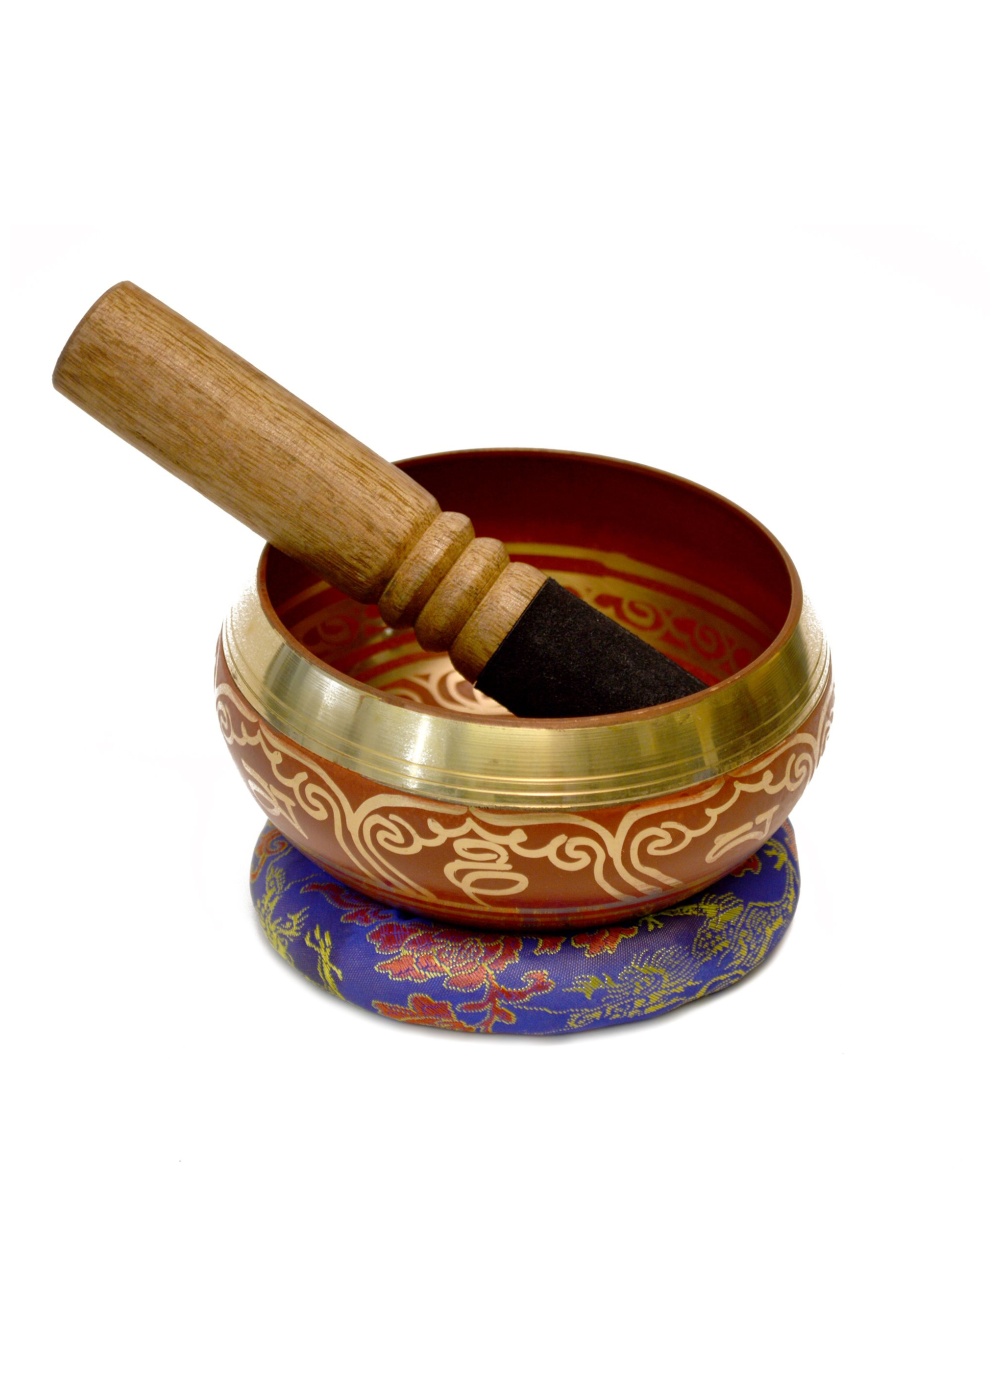 Handmade Tibetan Meditation Singing Bowl 5 Inches With Cushion